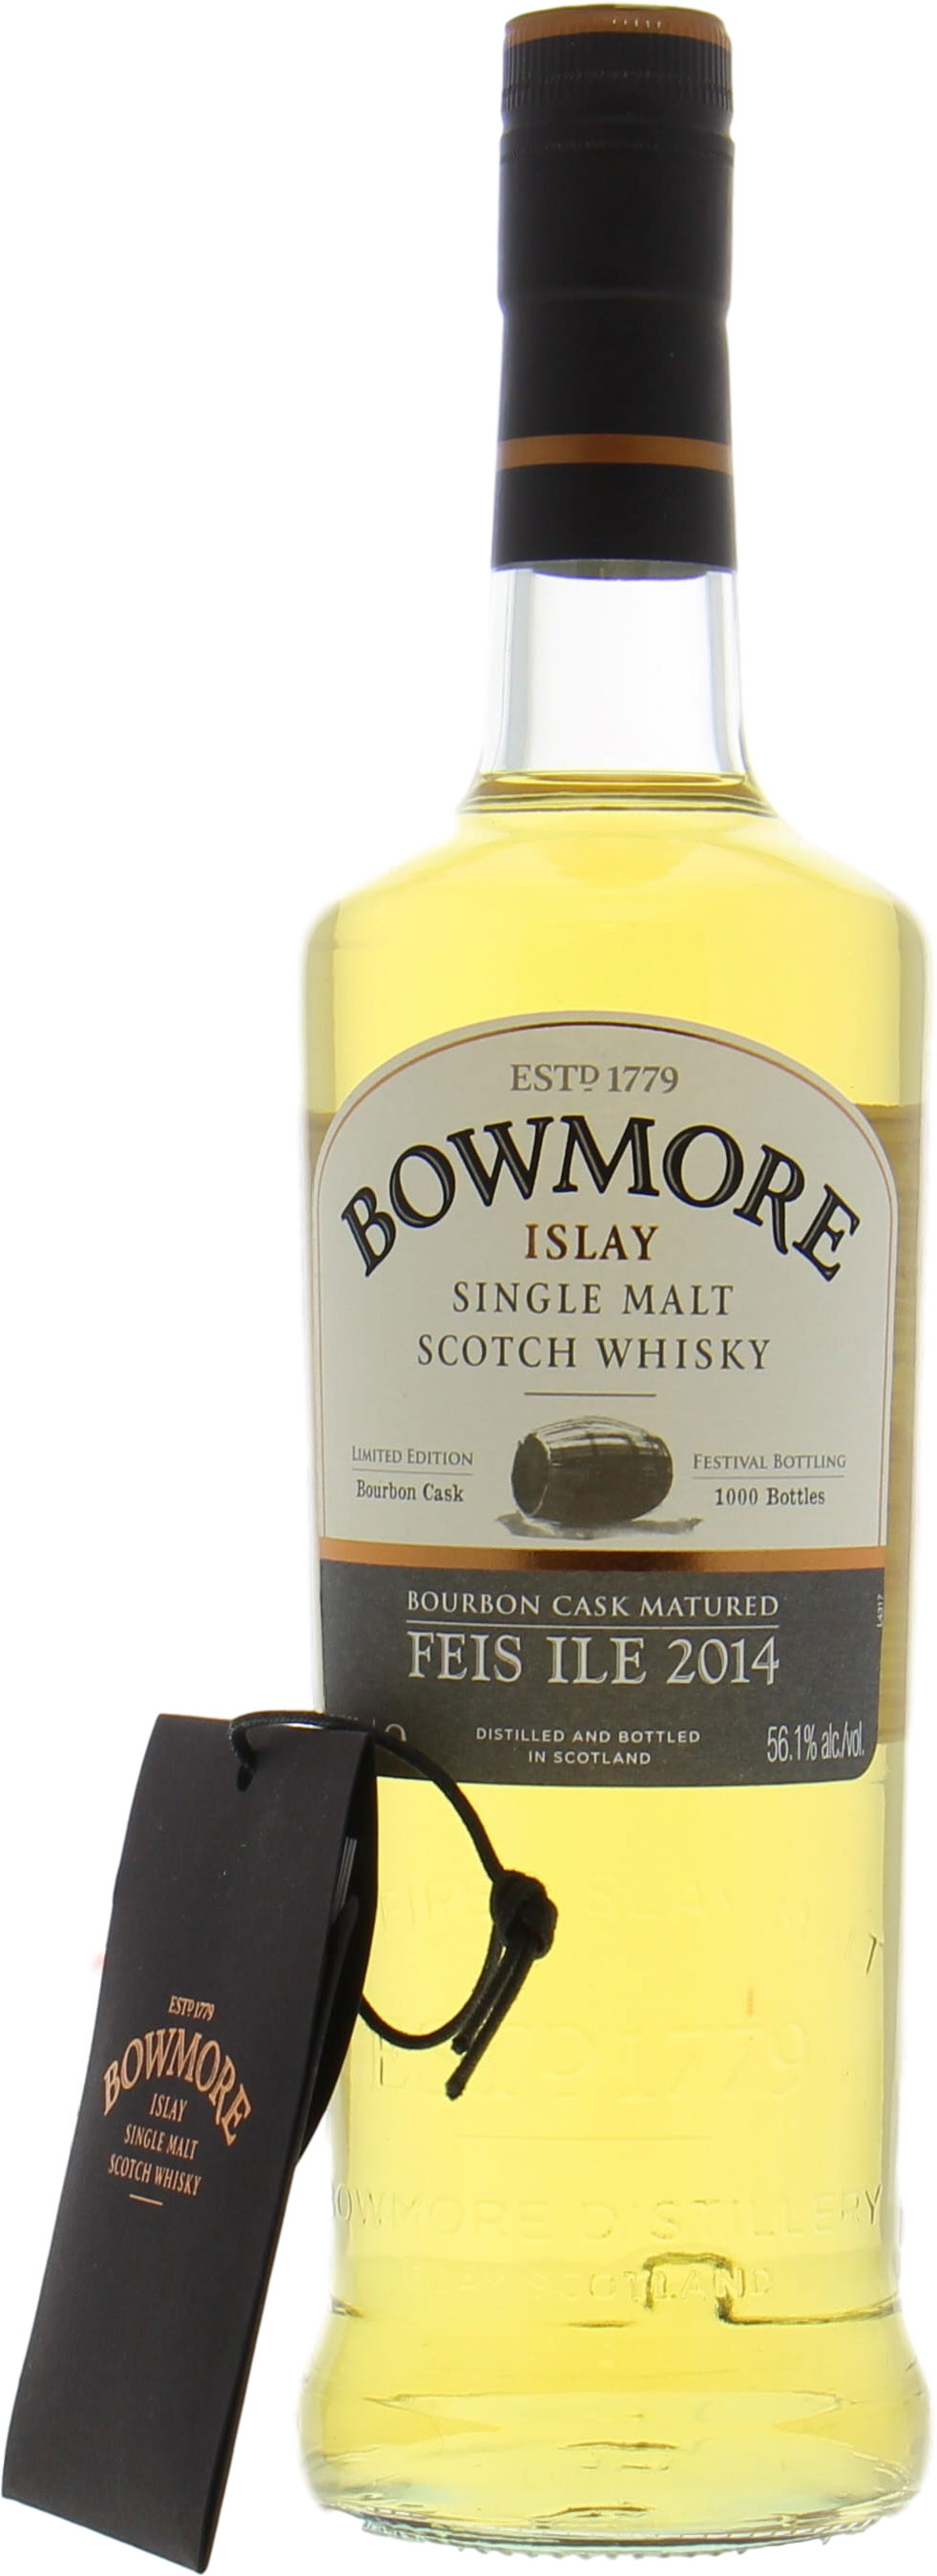 Bowmore - Feis Ile 2014 56.1% NV